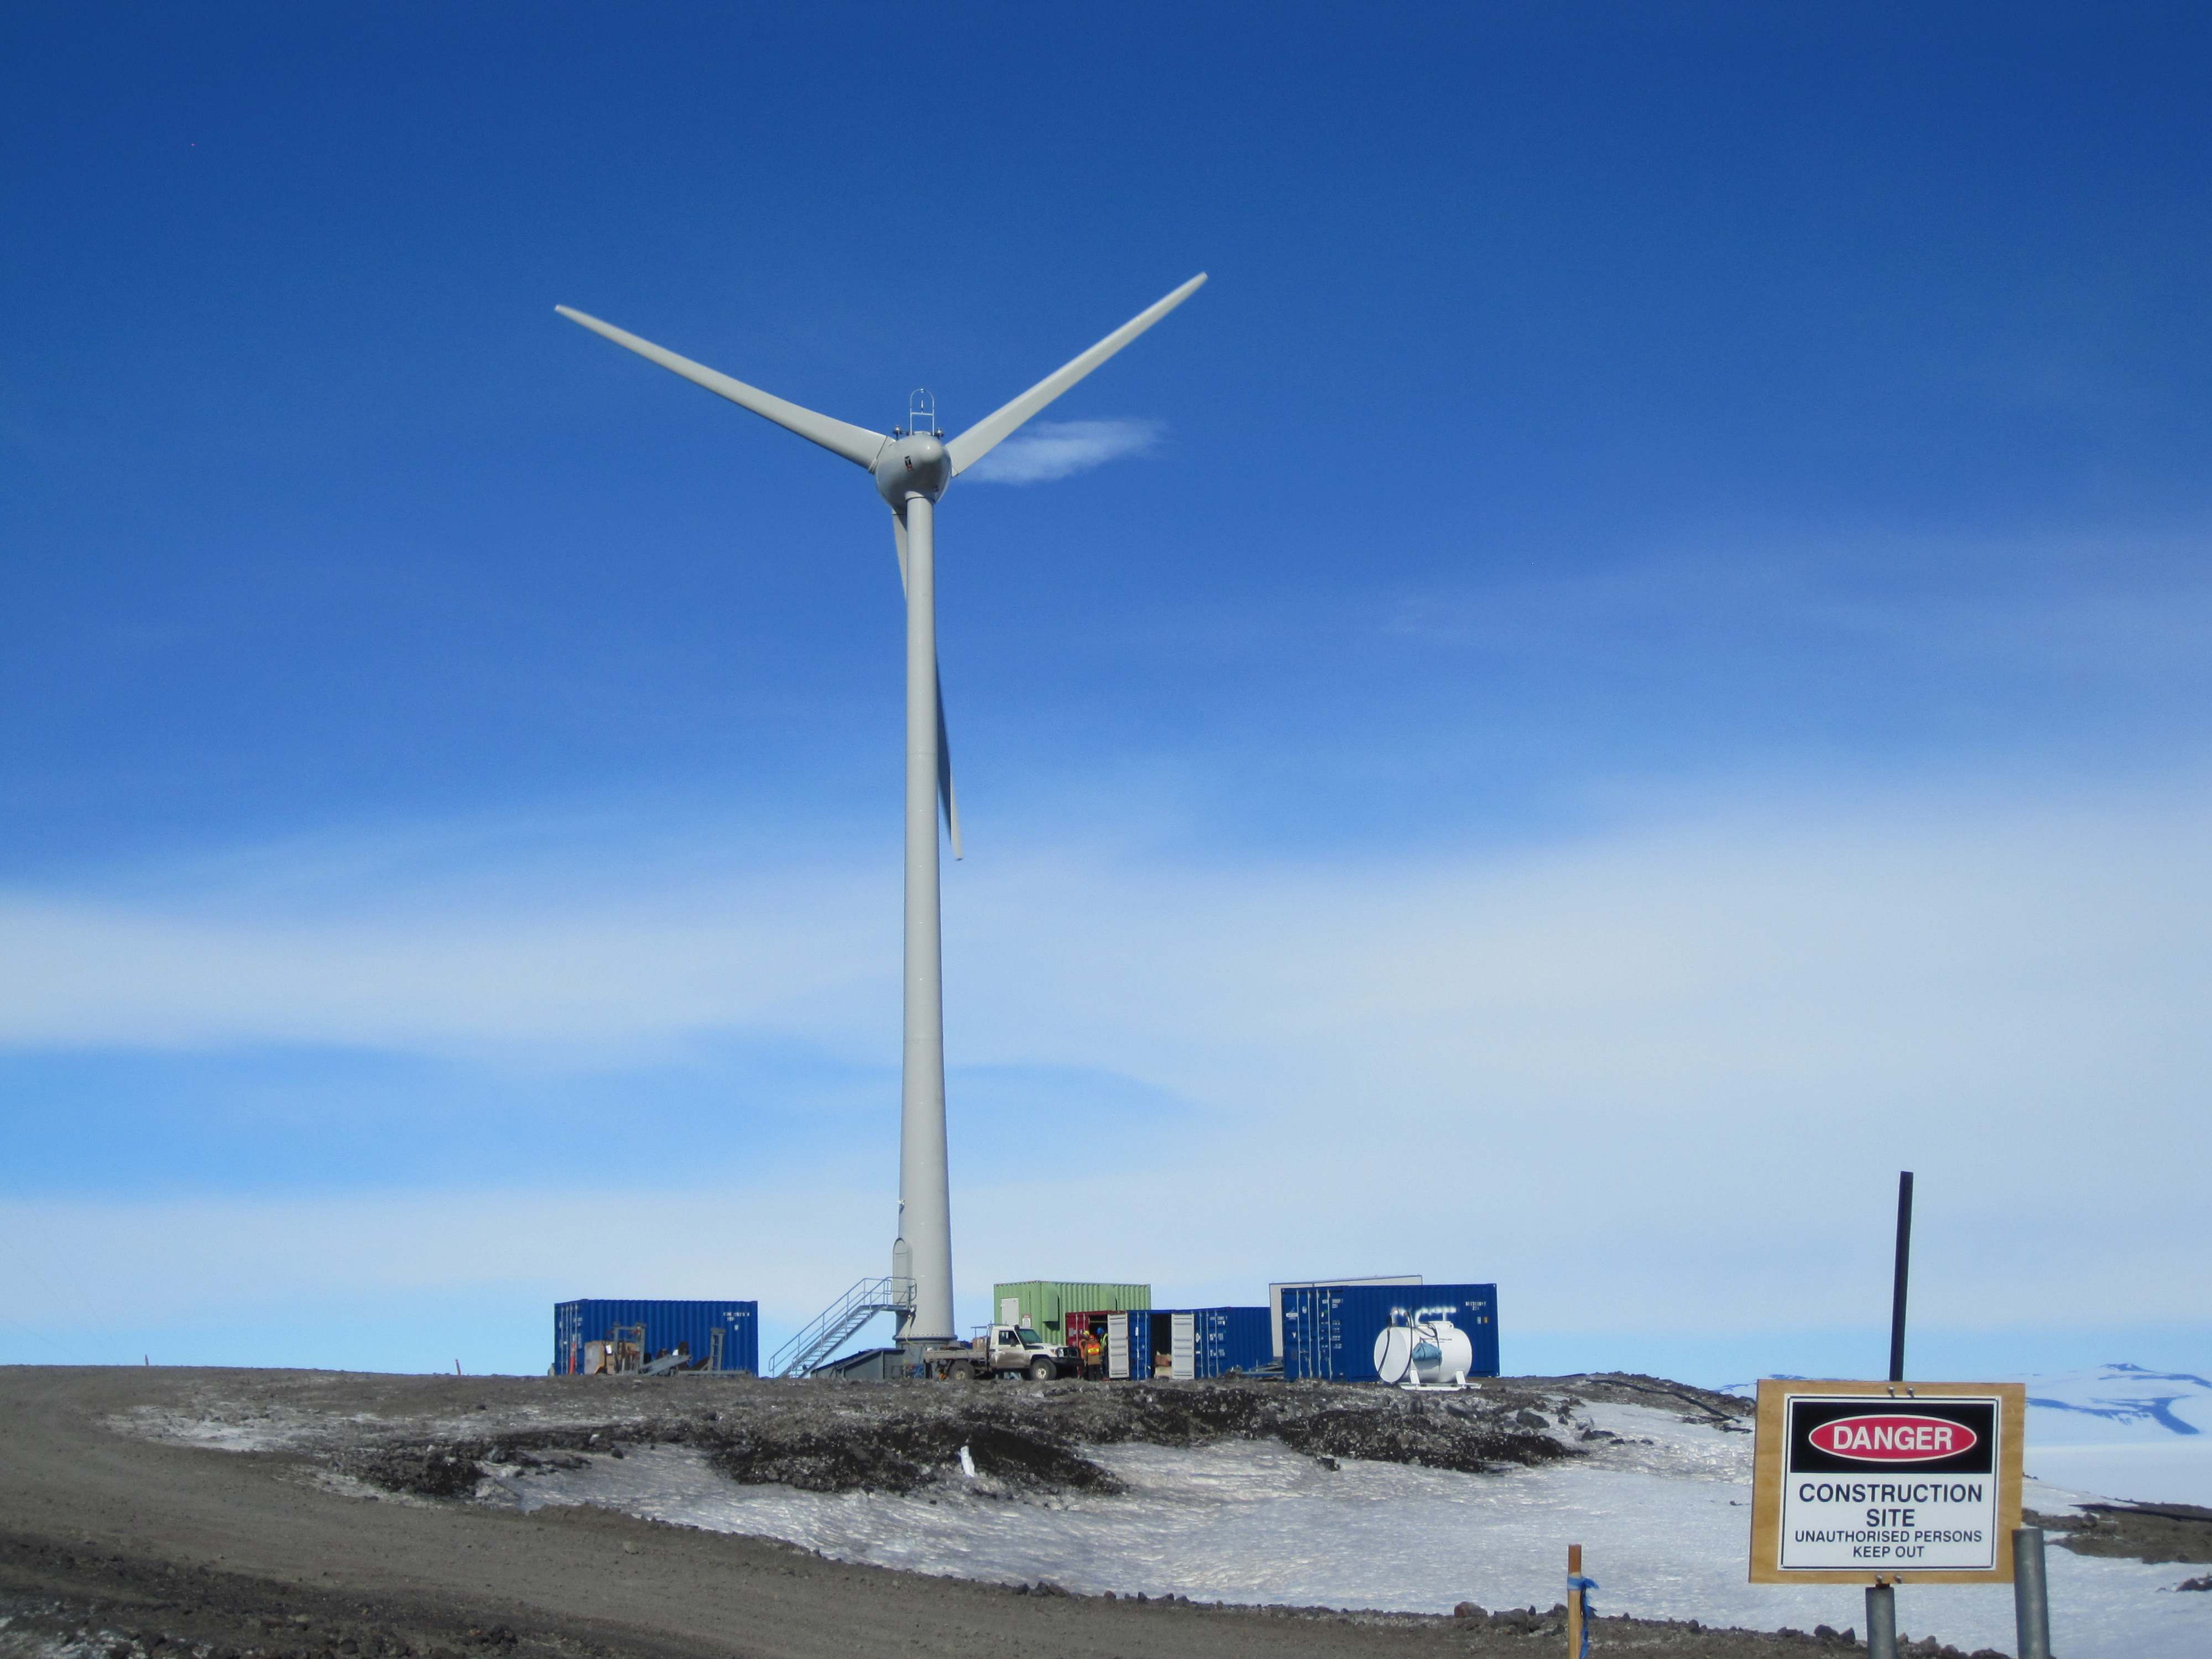 Wind turbine spins under blue sky.